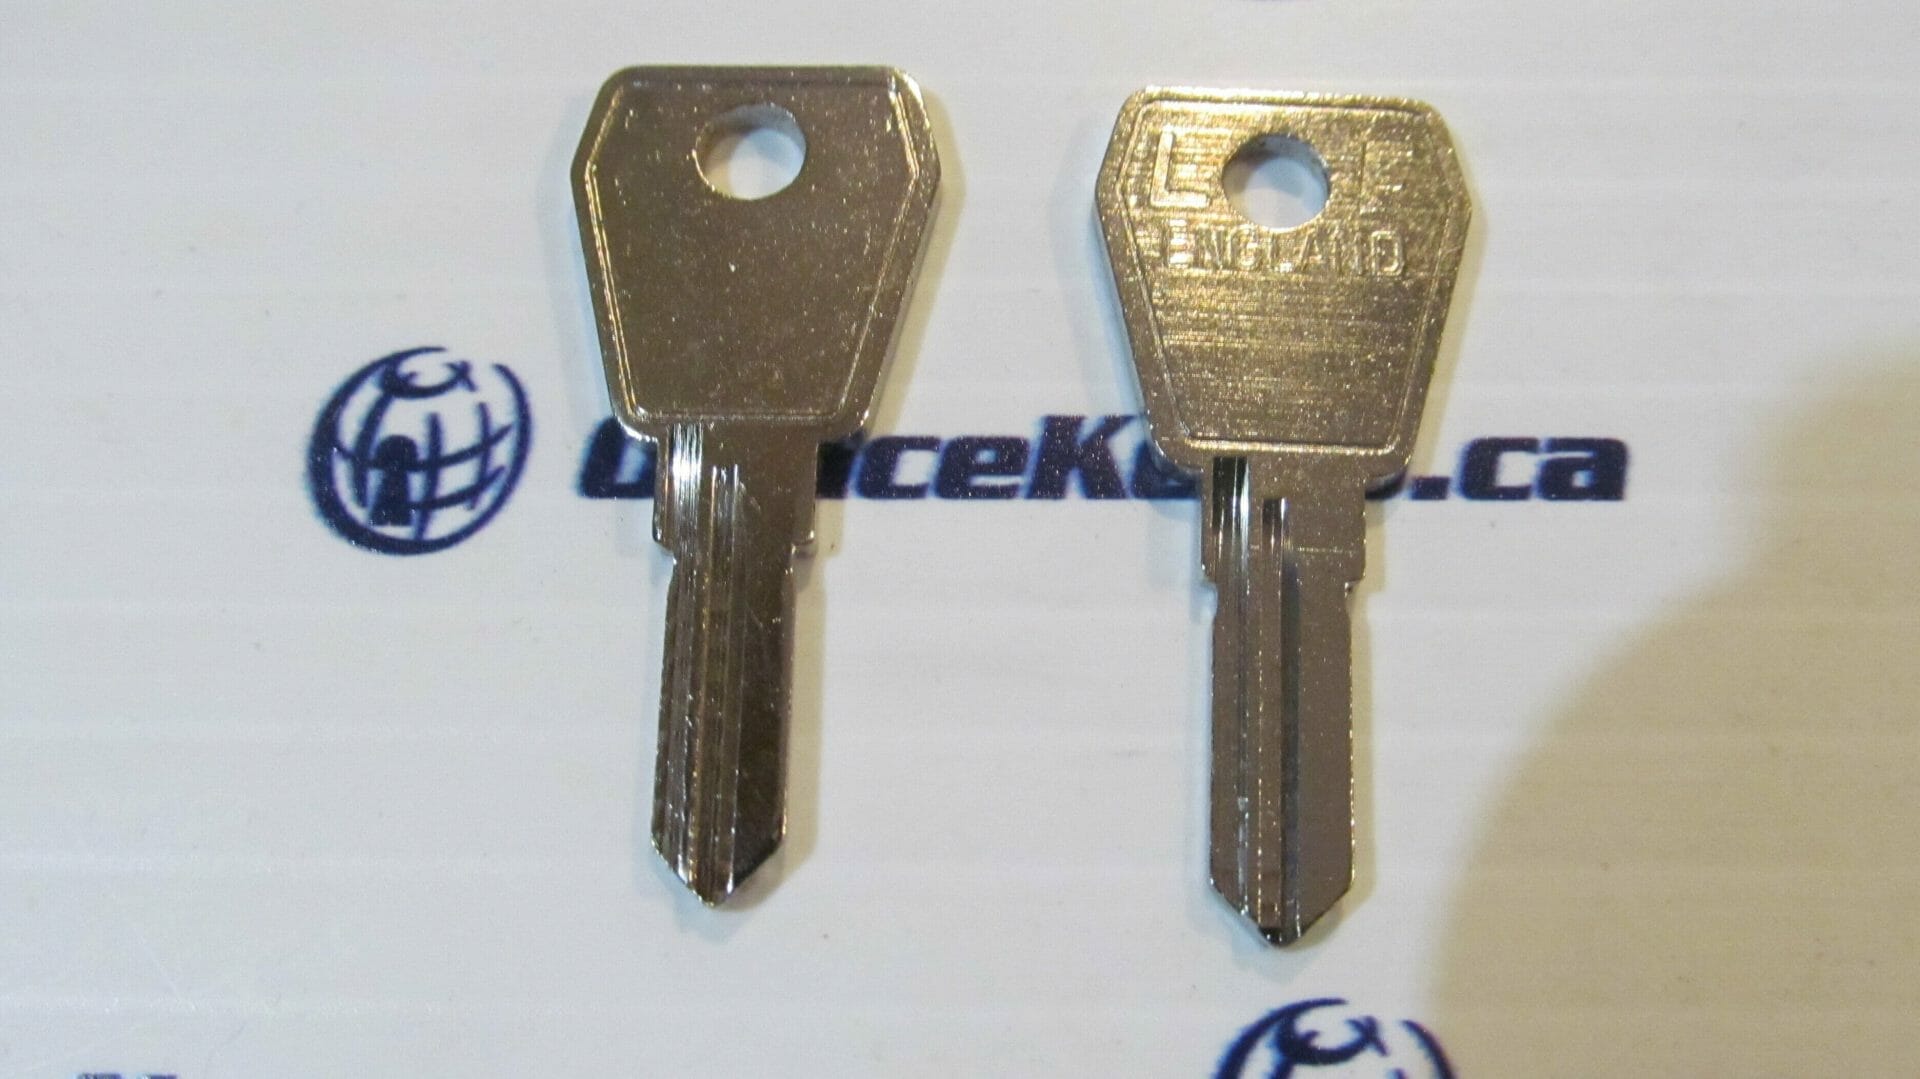 Eurolocks - Lowe and Fletcher 35 Series Key Blanks